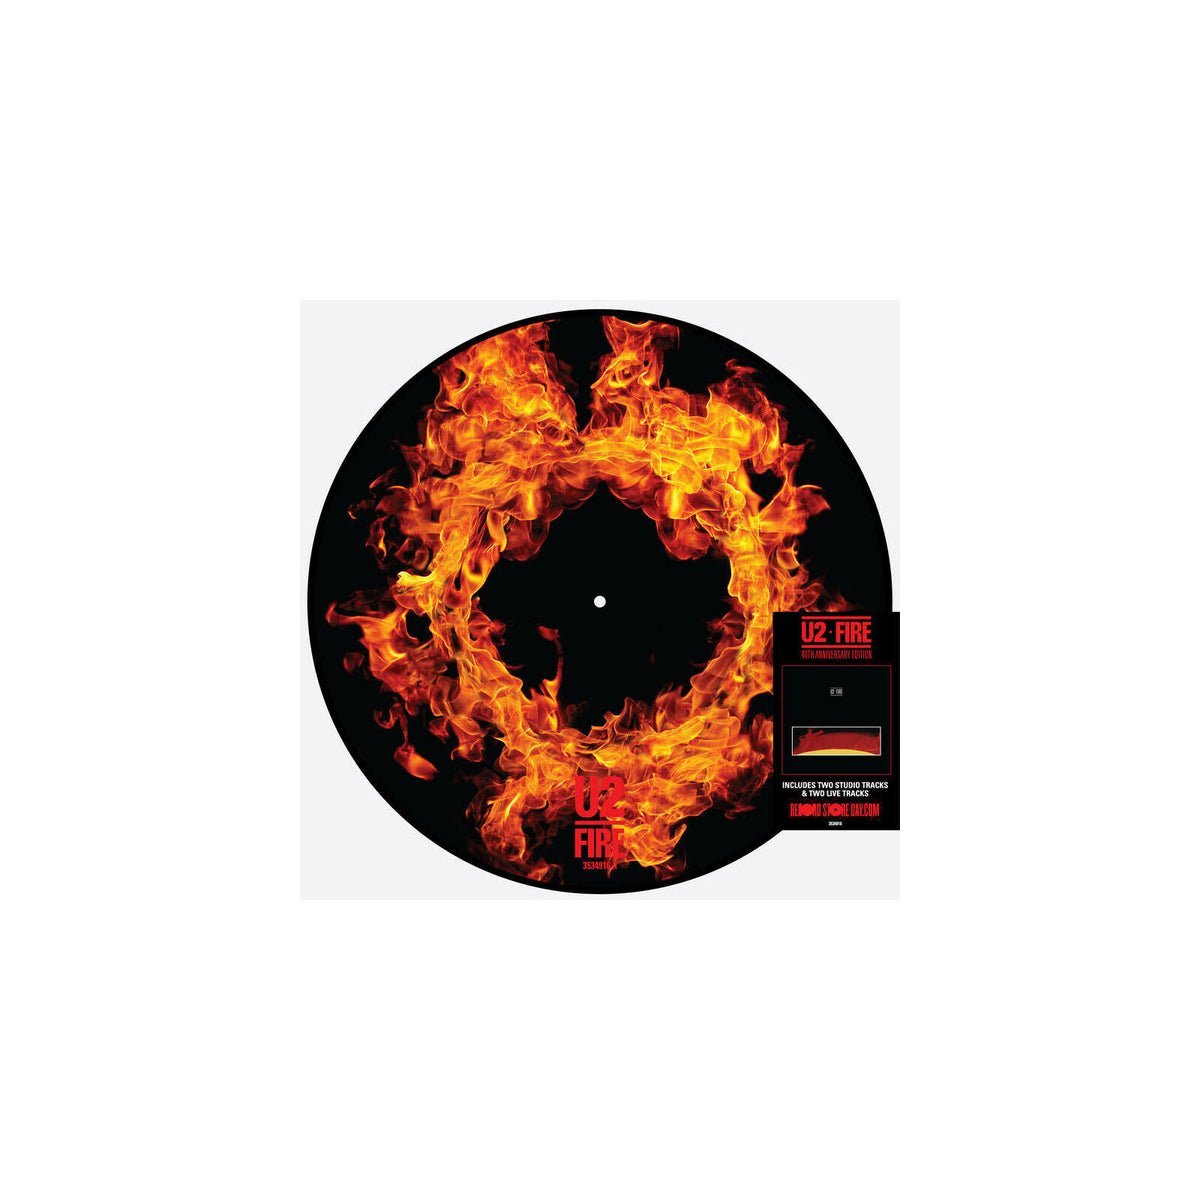 U2 - Fire Records & LPs Vinyl